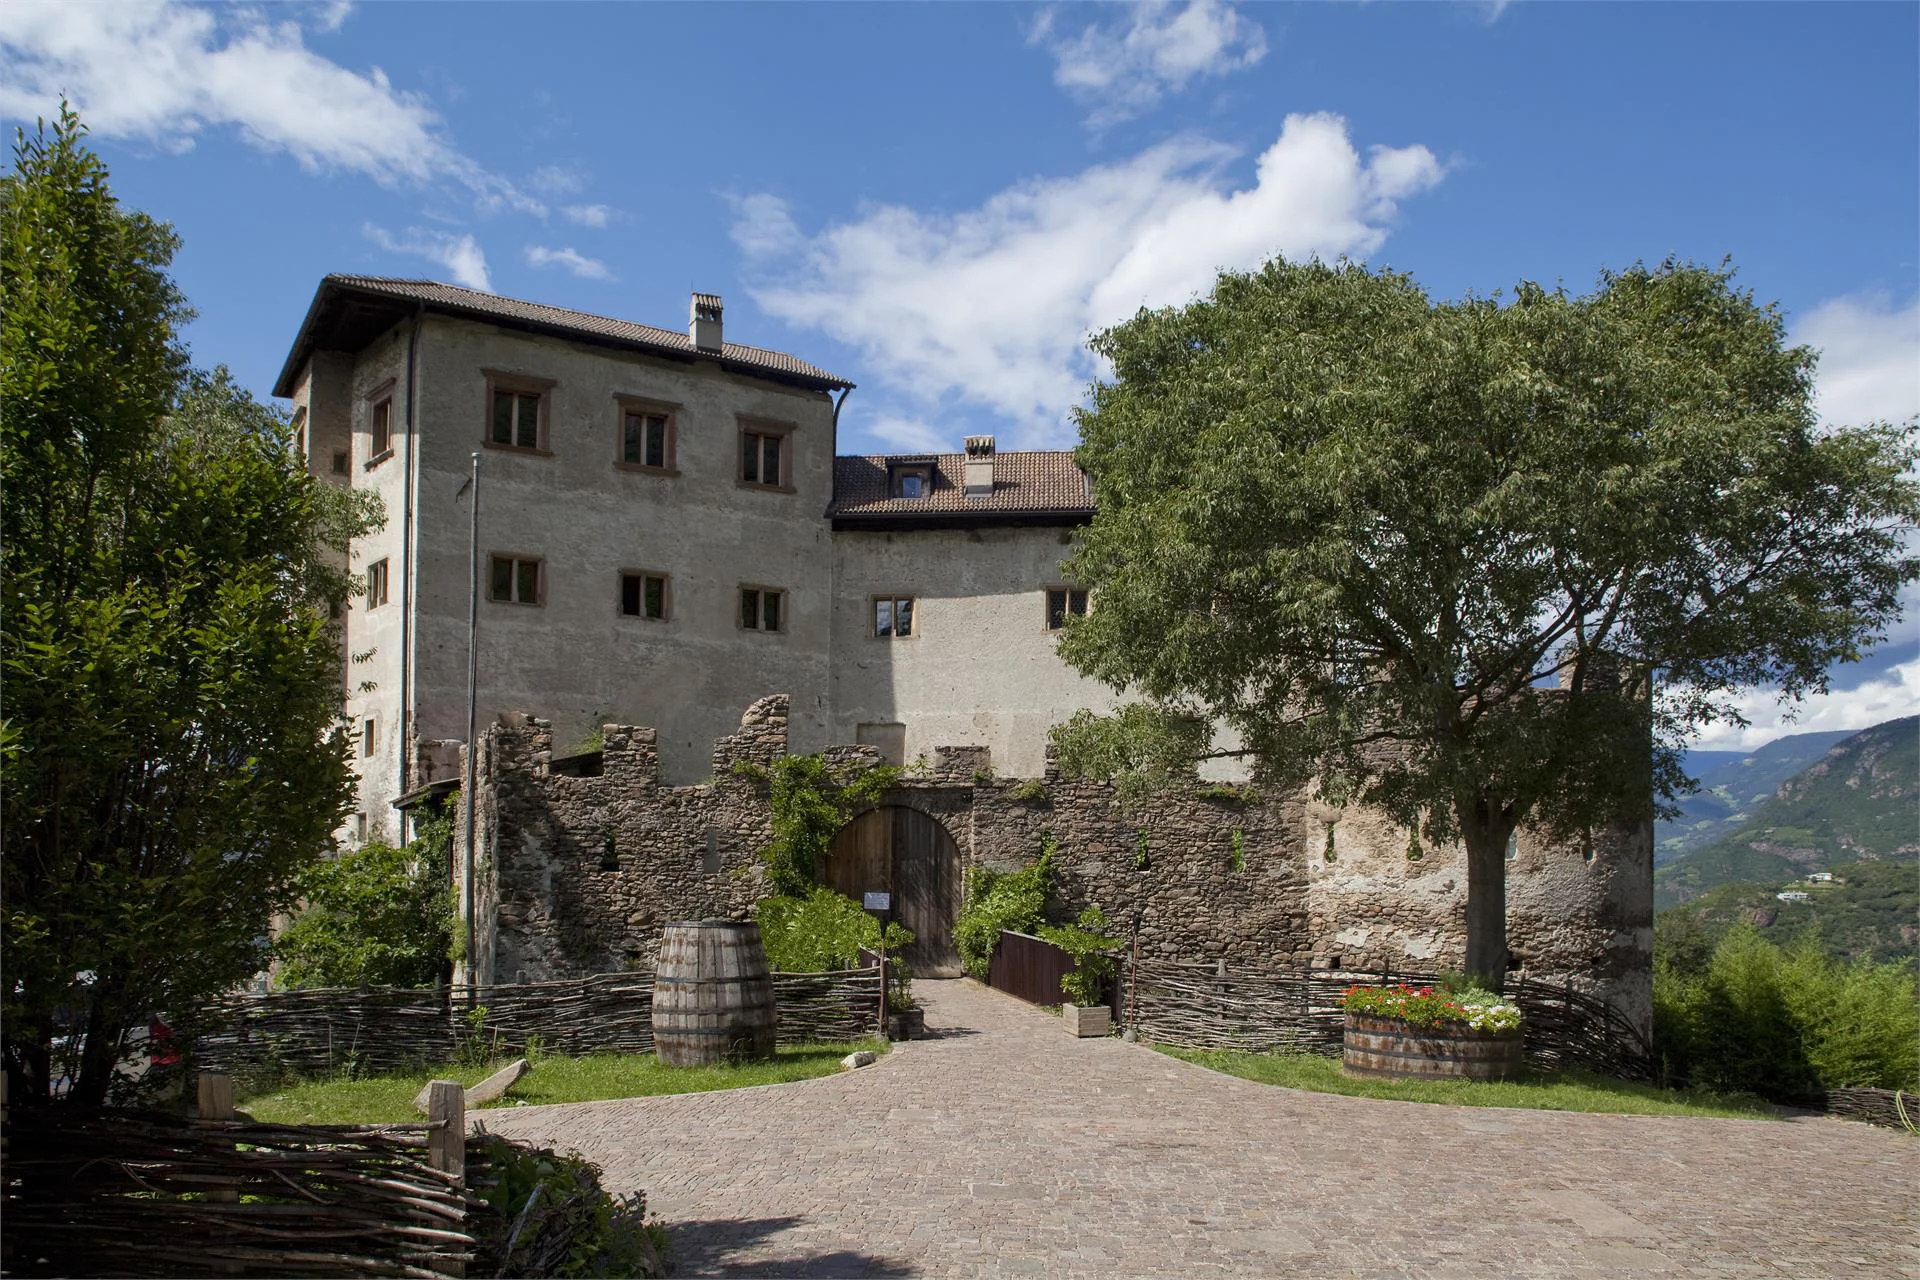 Flavon/Haselburg Castle Bolzano/Bozen 1 suedtirol.info